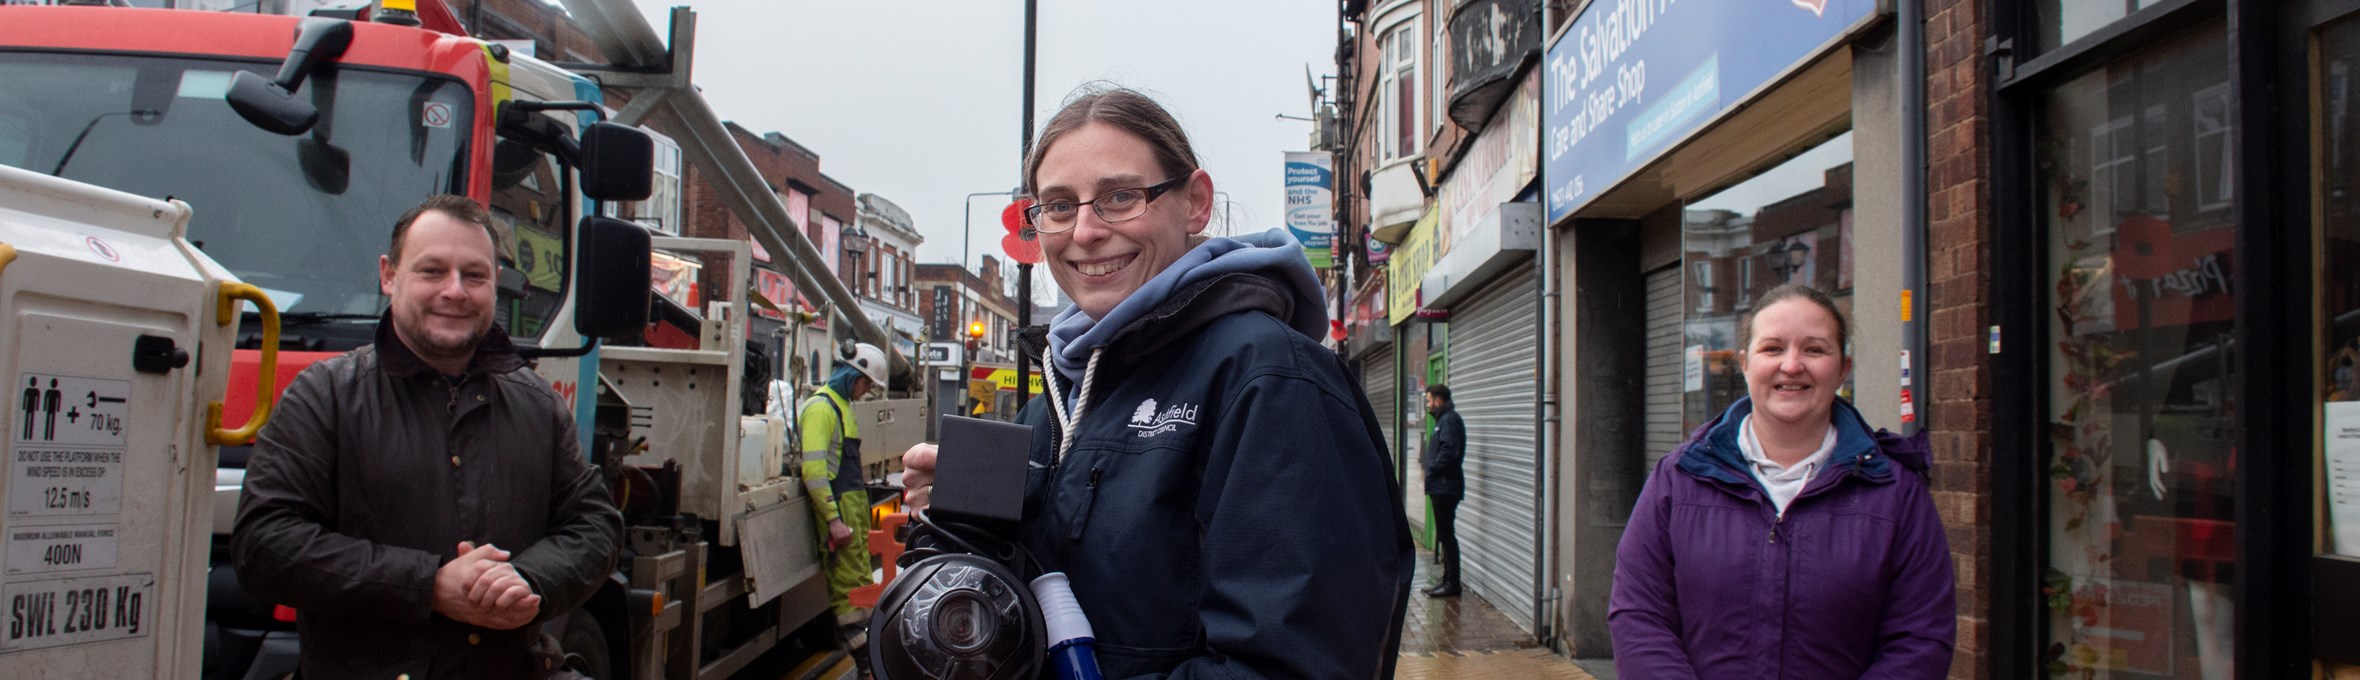 Cllr Helen-Ann Smith with new CCTV camera